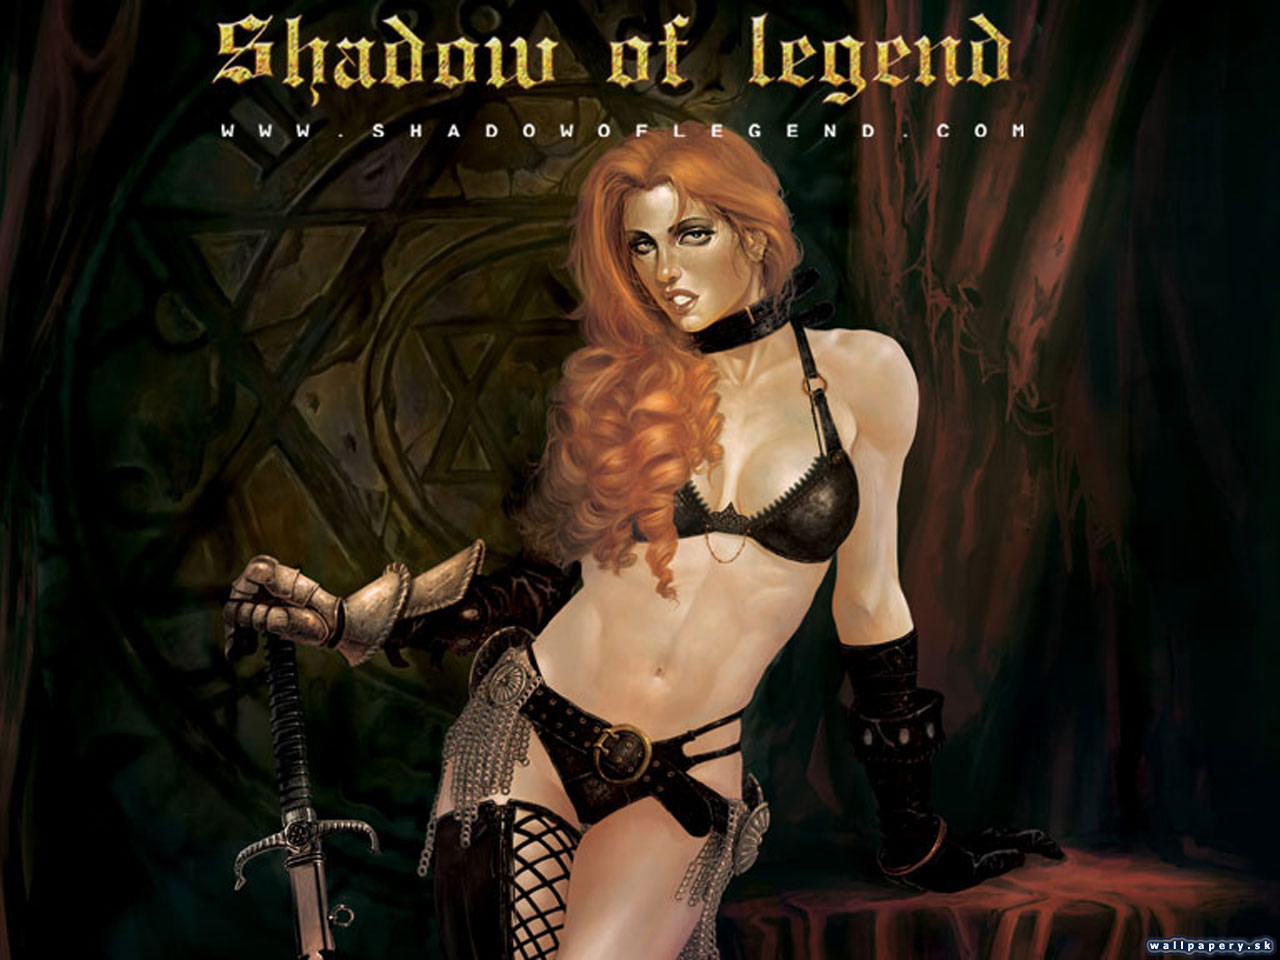 Shadow of Legend - wallpaper 4